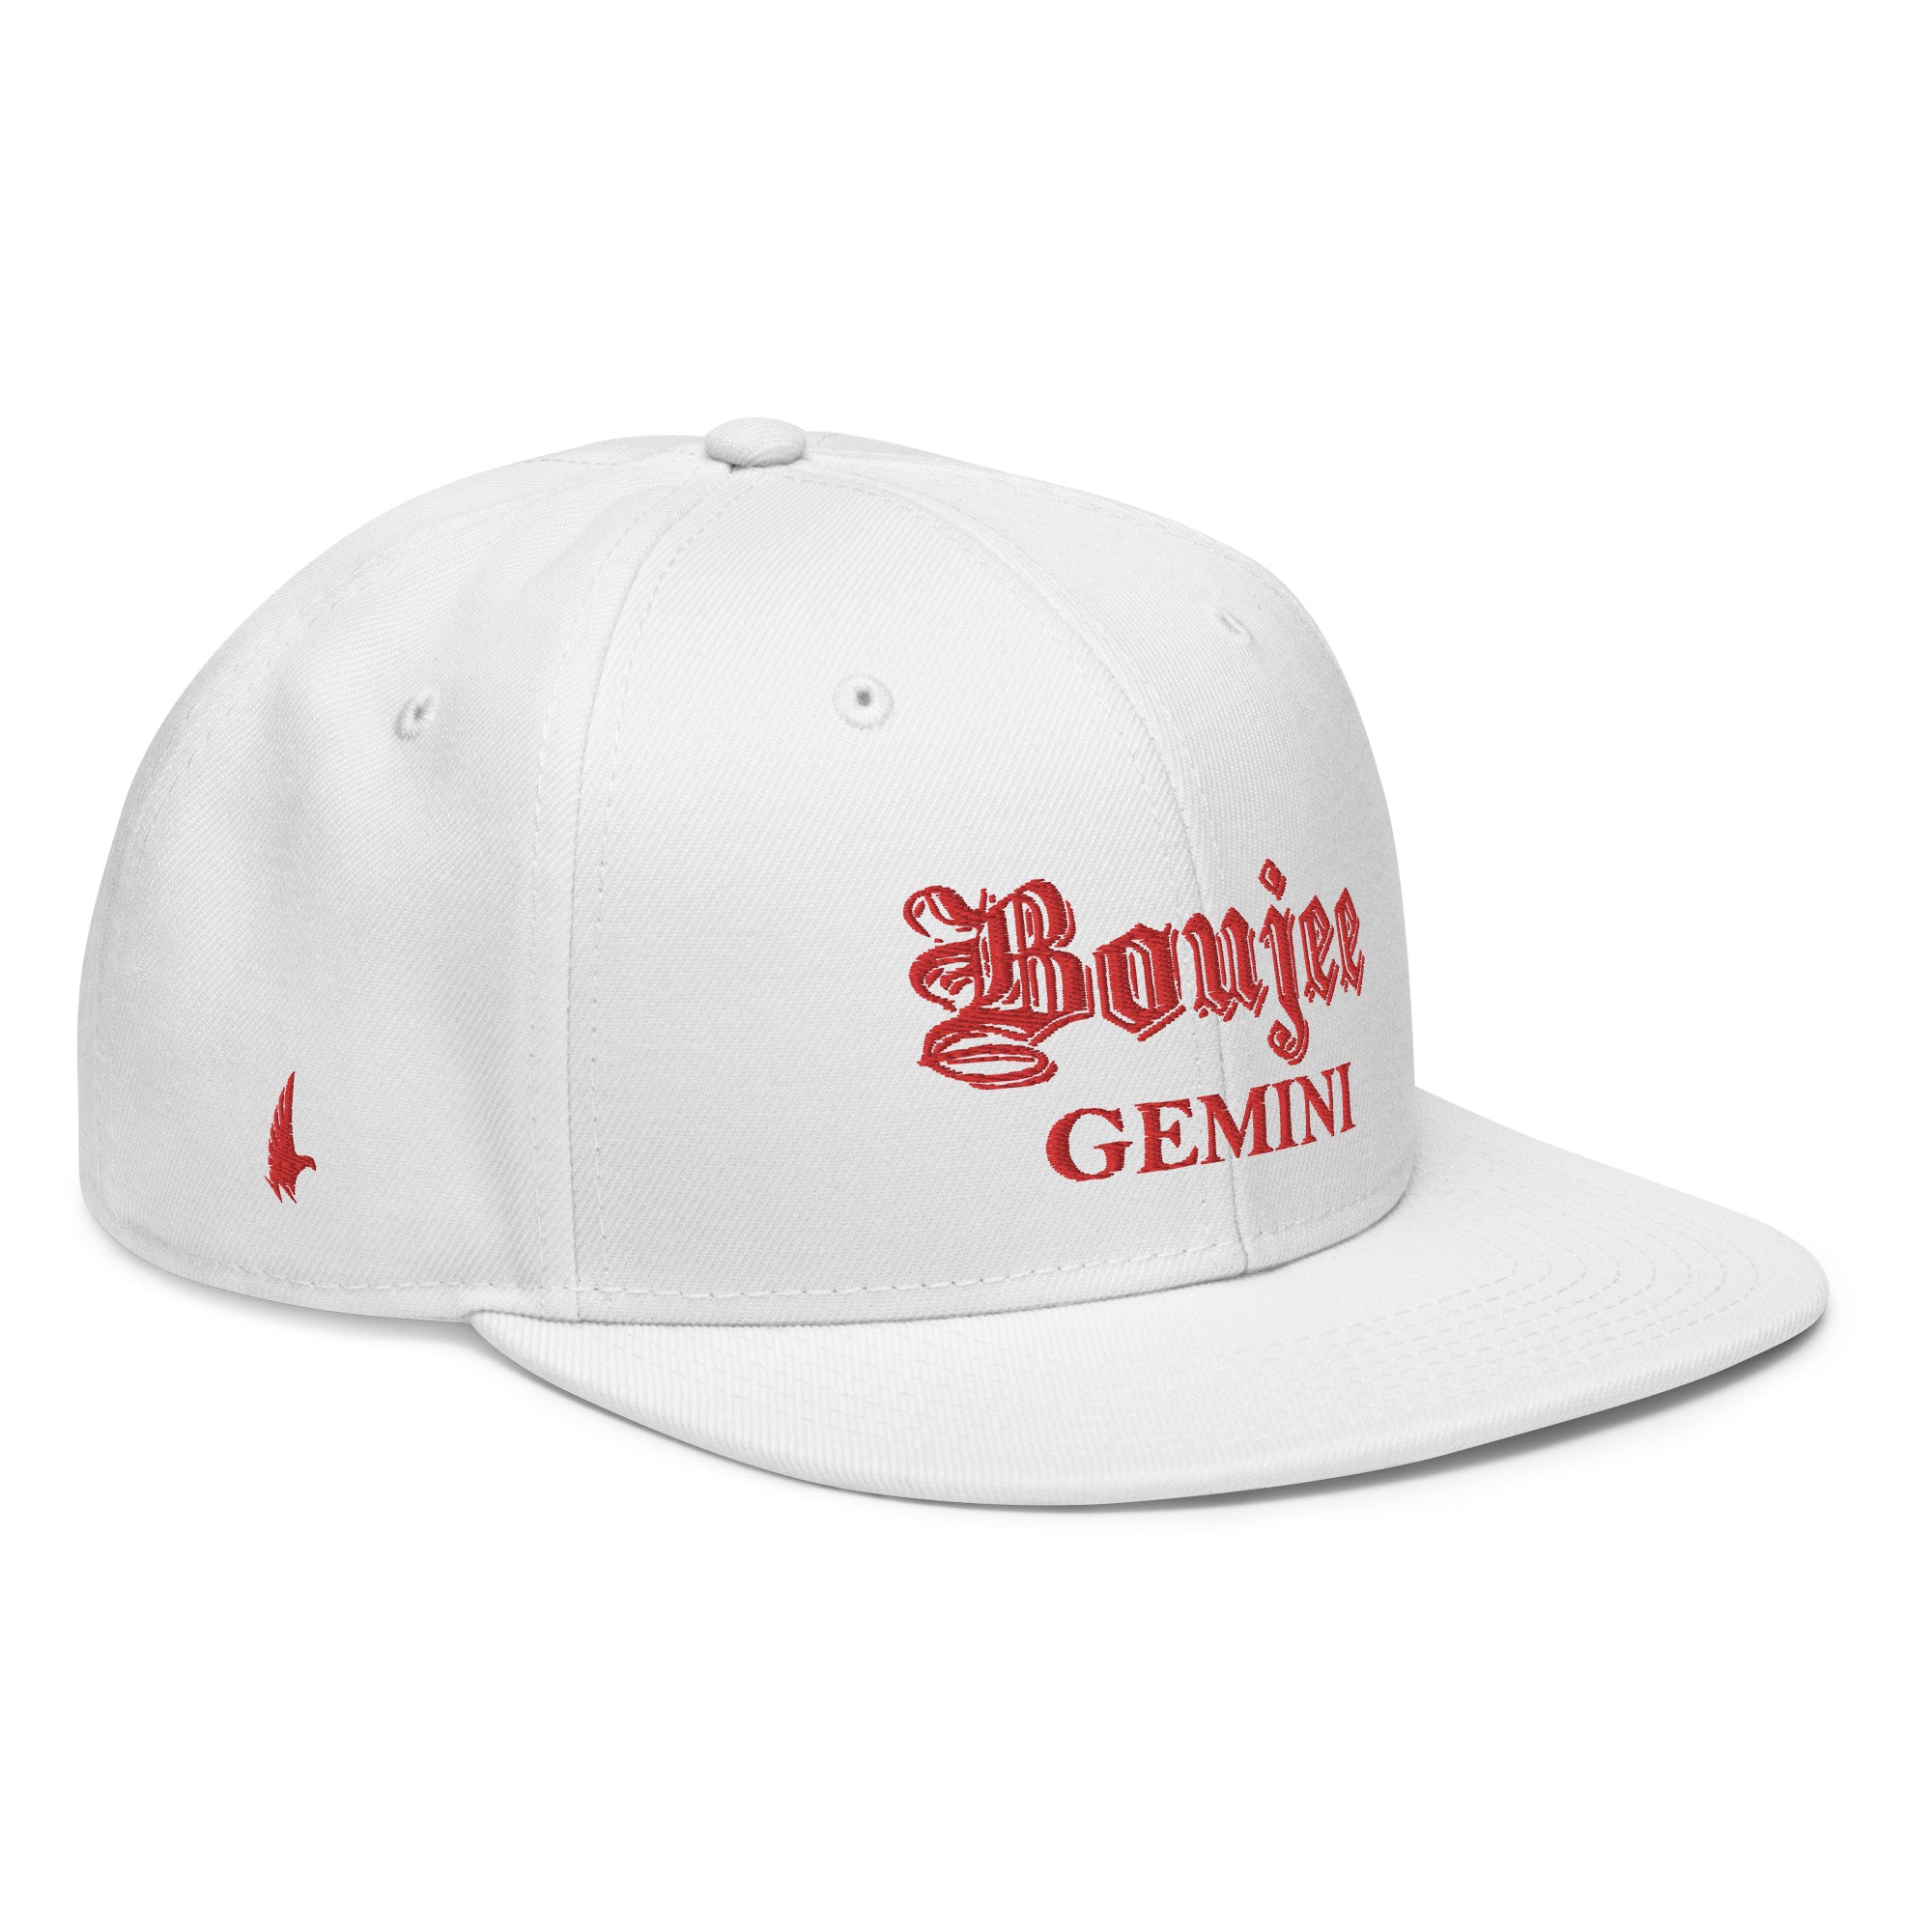 Boujee Gemini Snapback Hat - White/Red - Loyalty Vibes